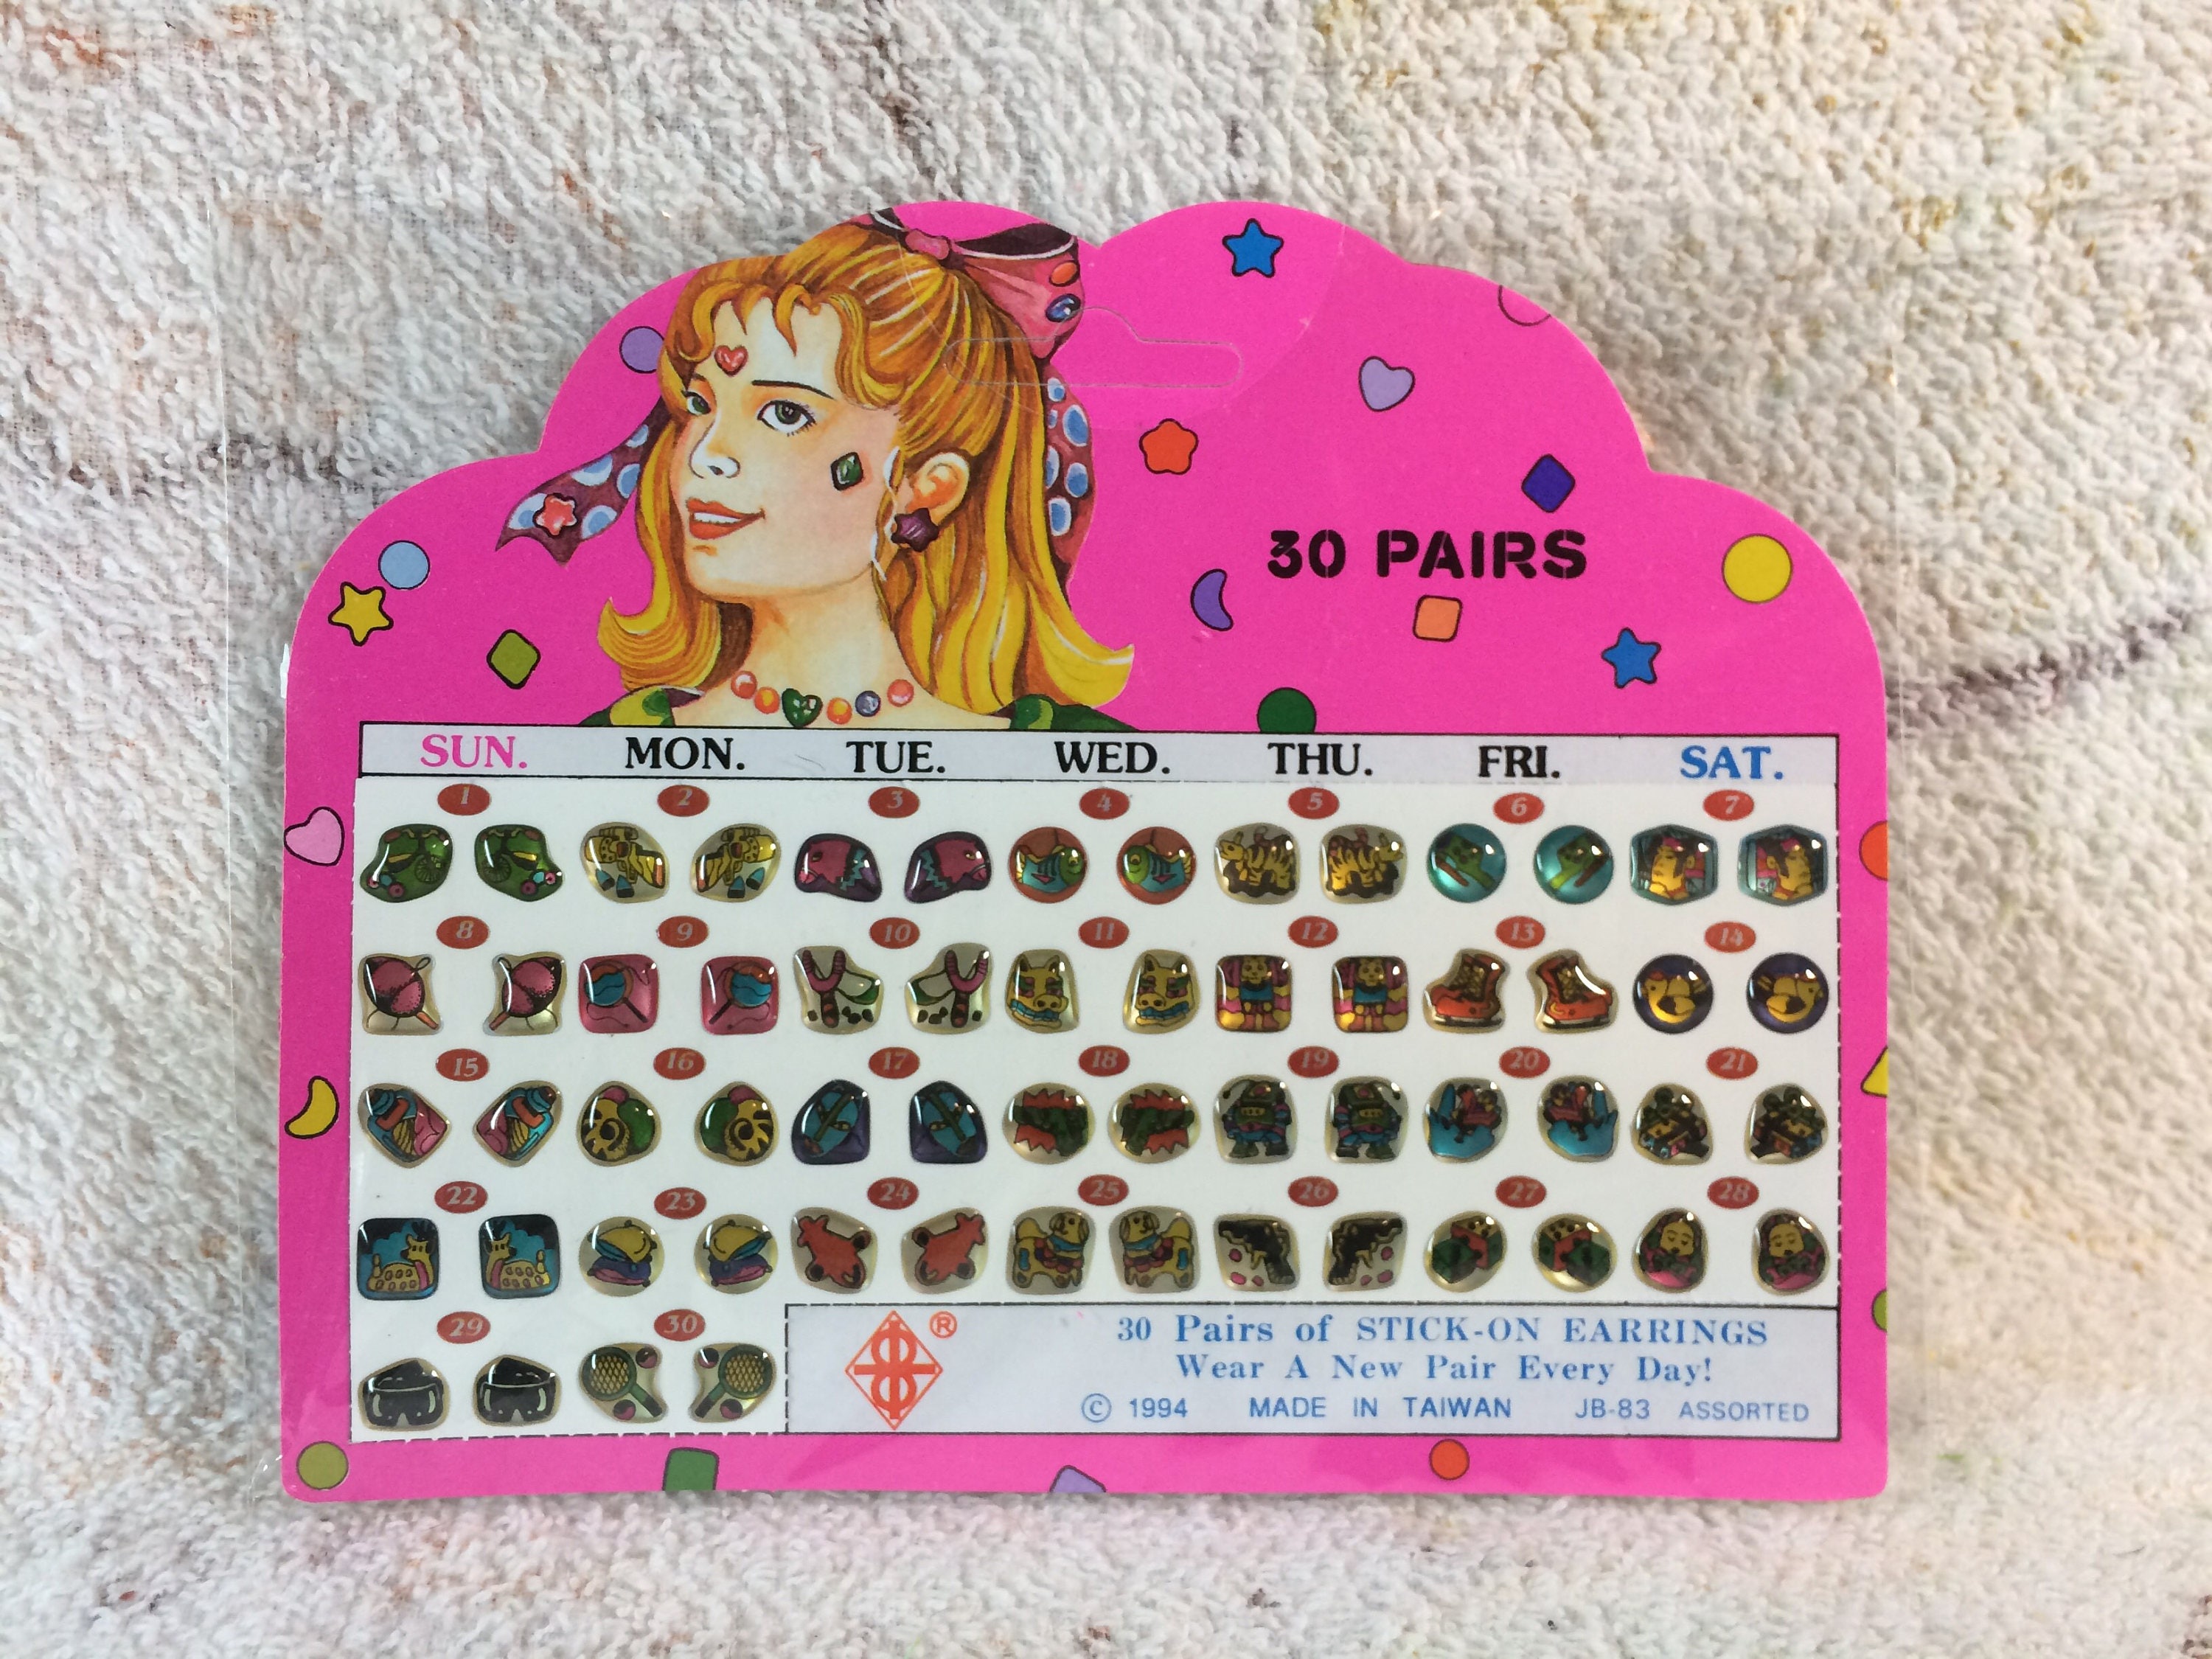 Who else had sticker earrings? : r/nostalgia